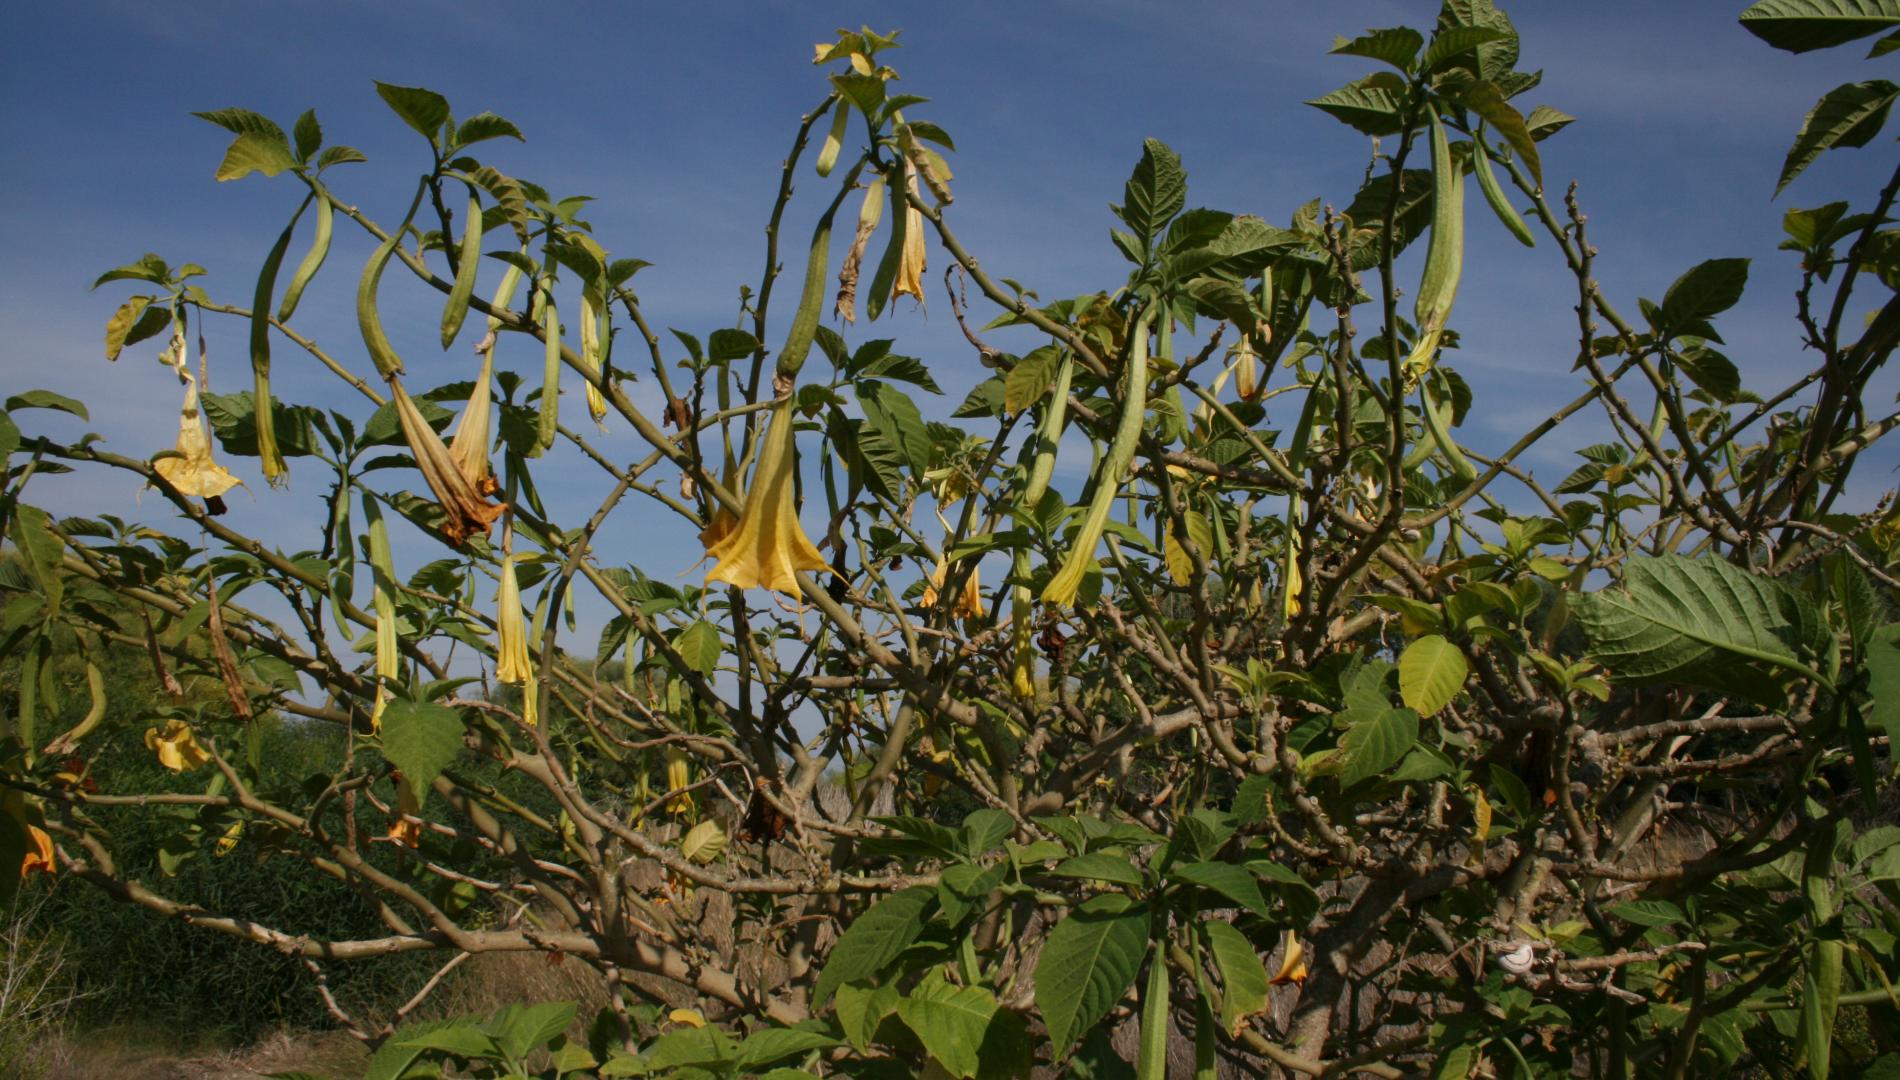 Brugmansia species